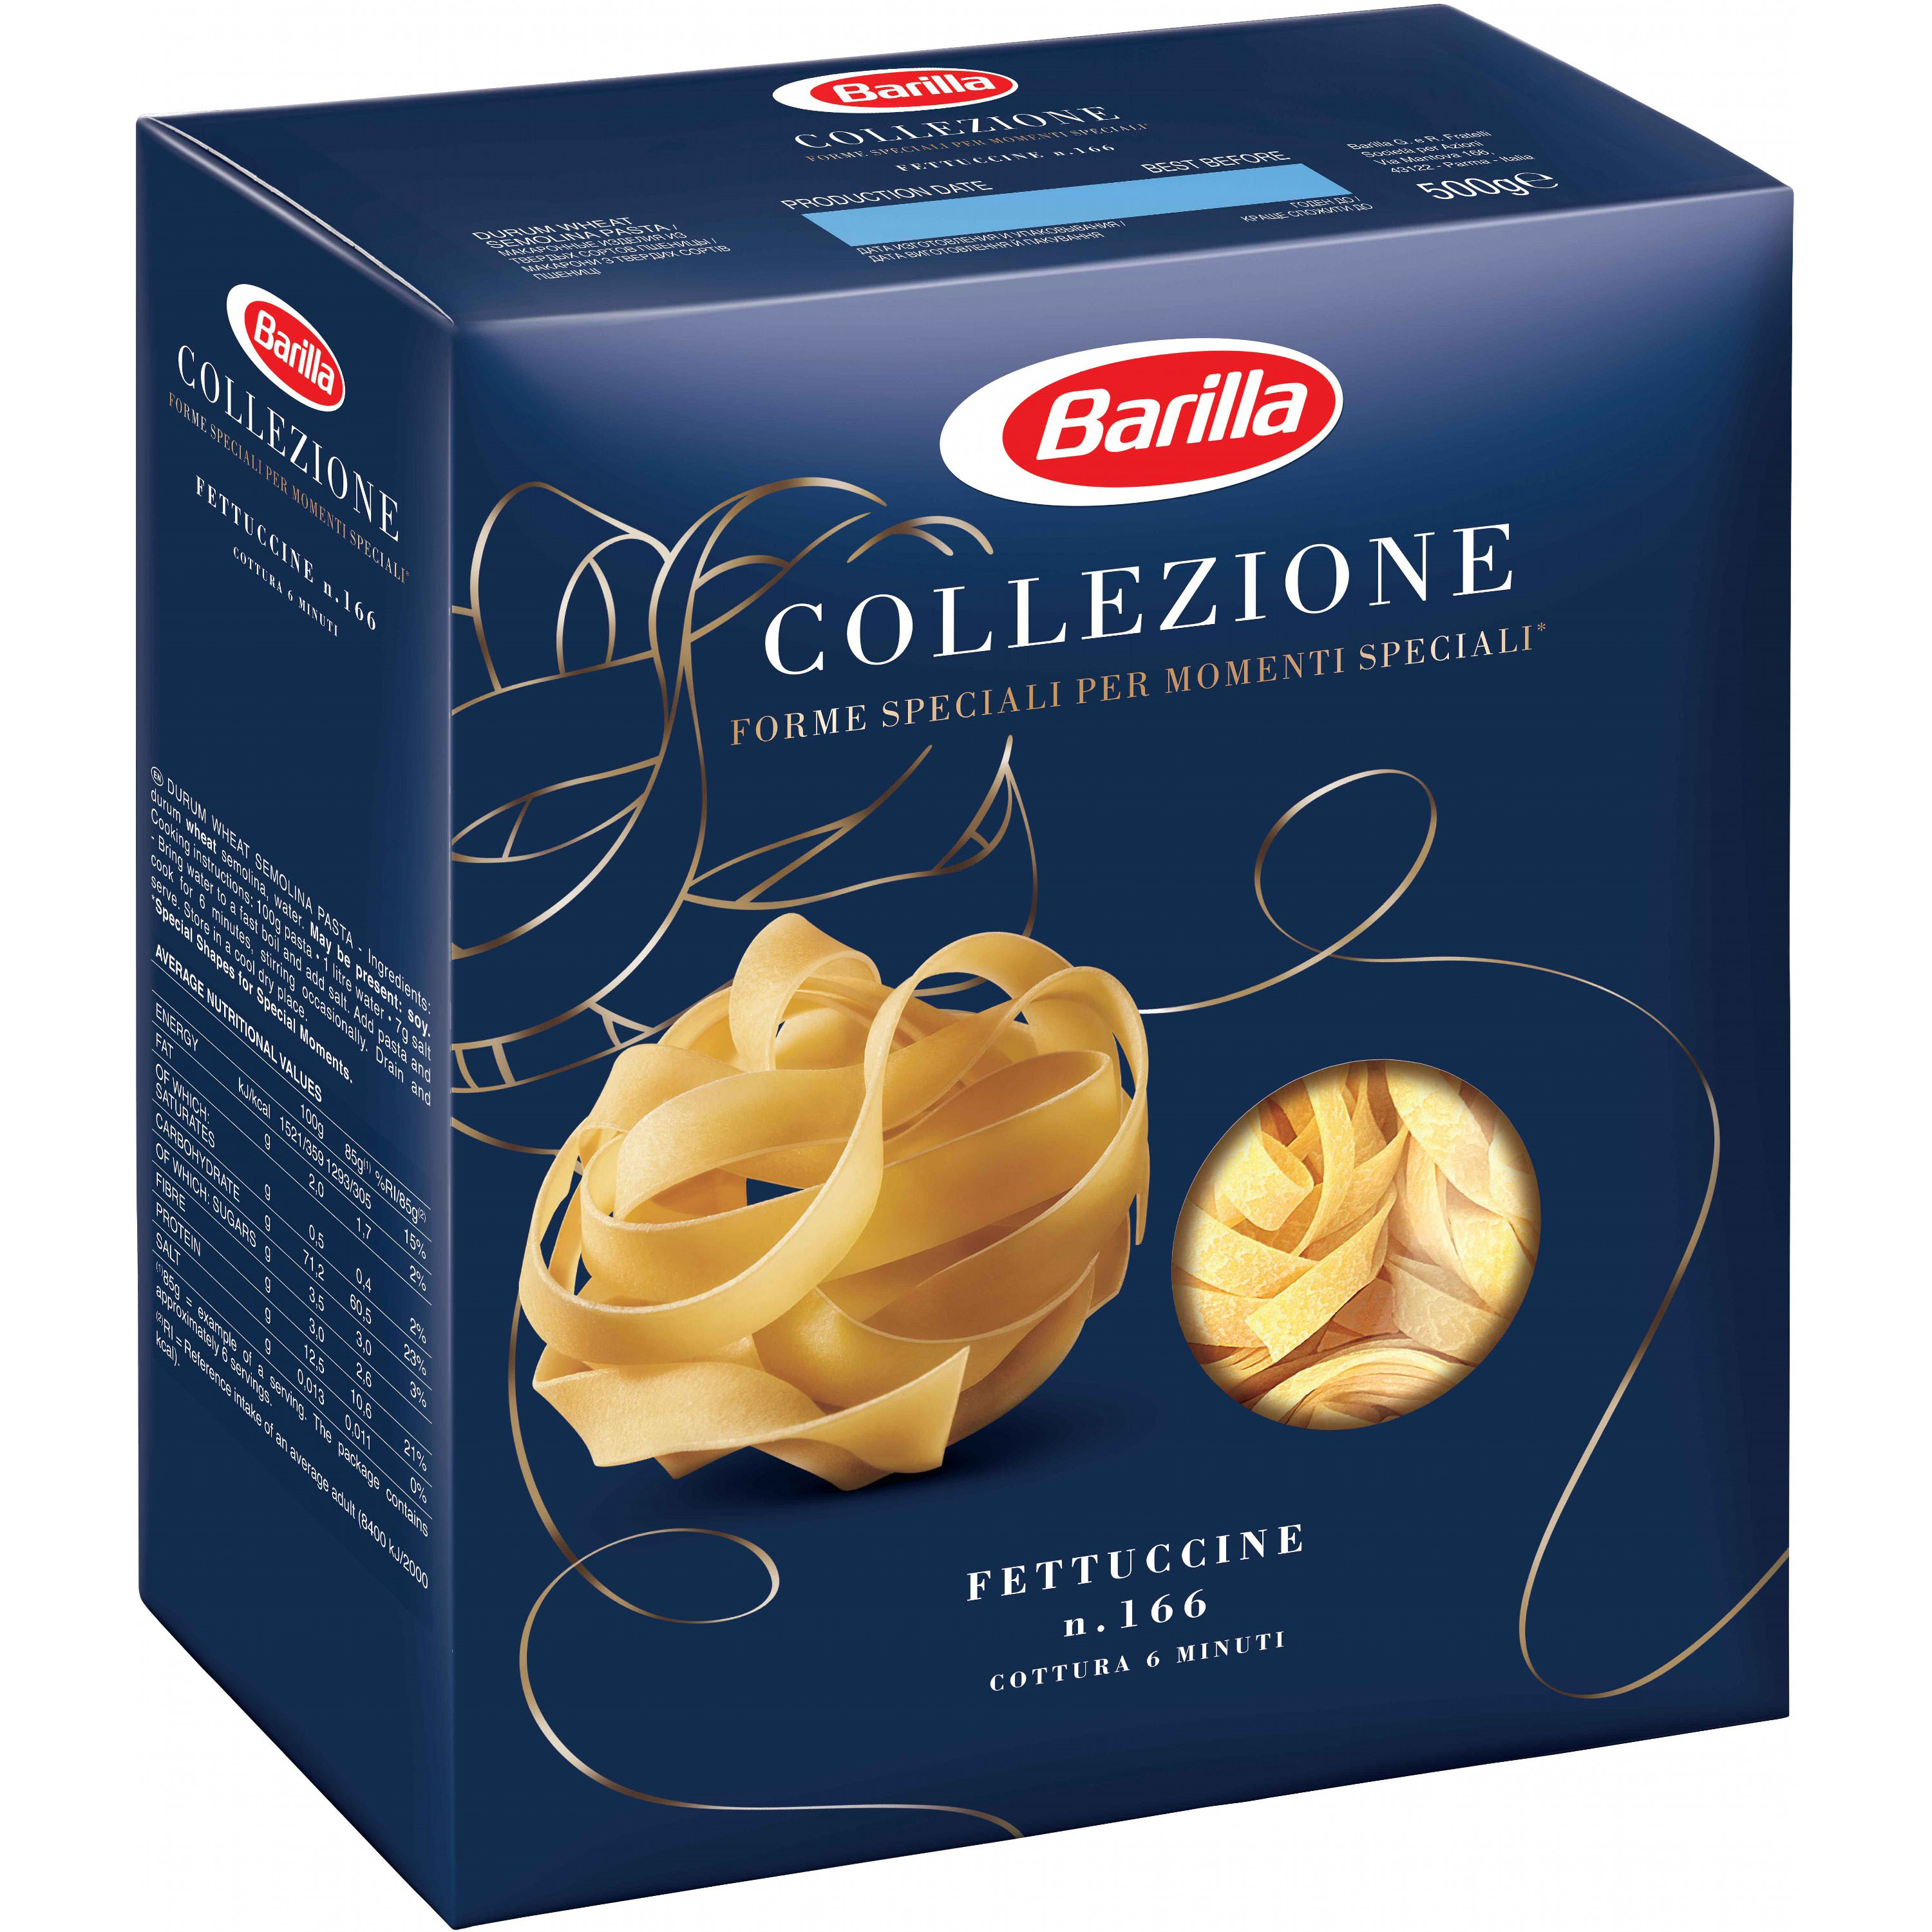 Макаронні вироби Barilla Collezione Fettuccine №166 500 г - фото 4